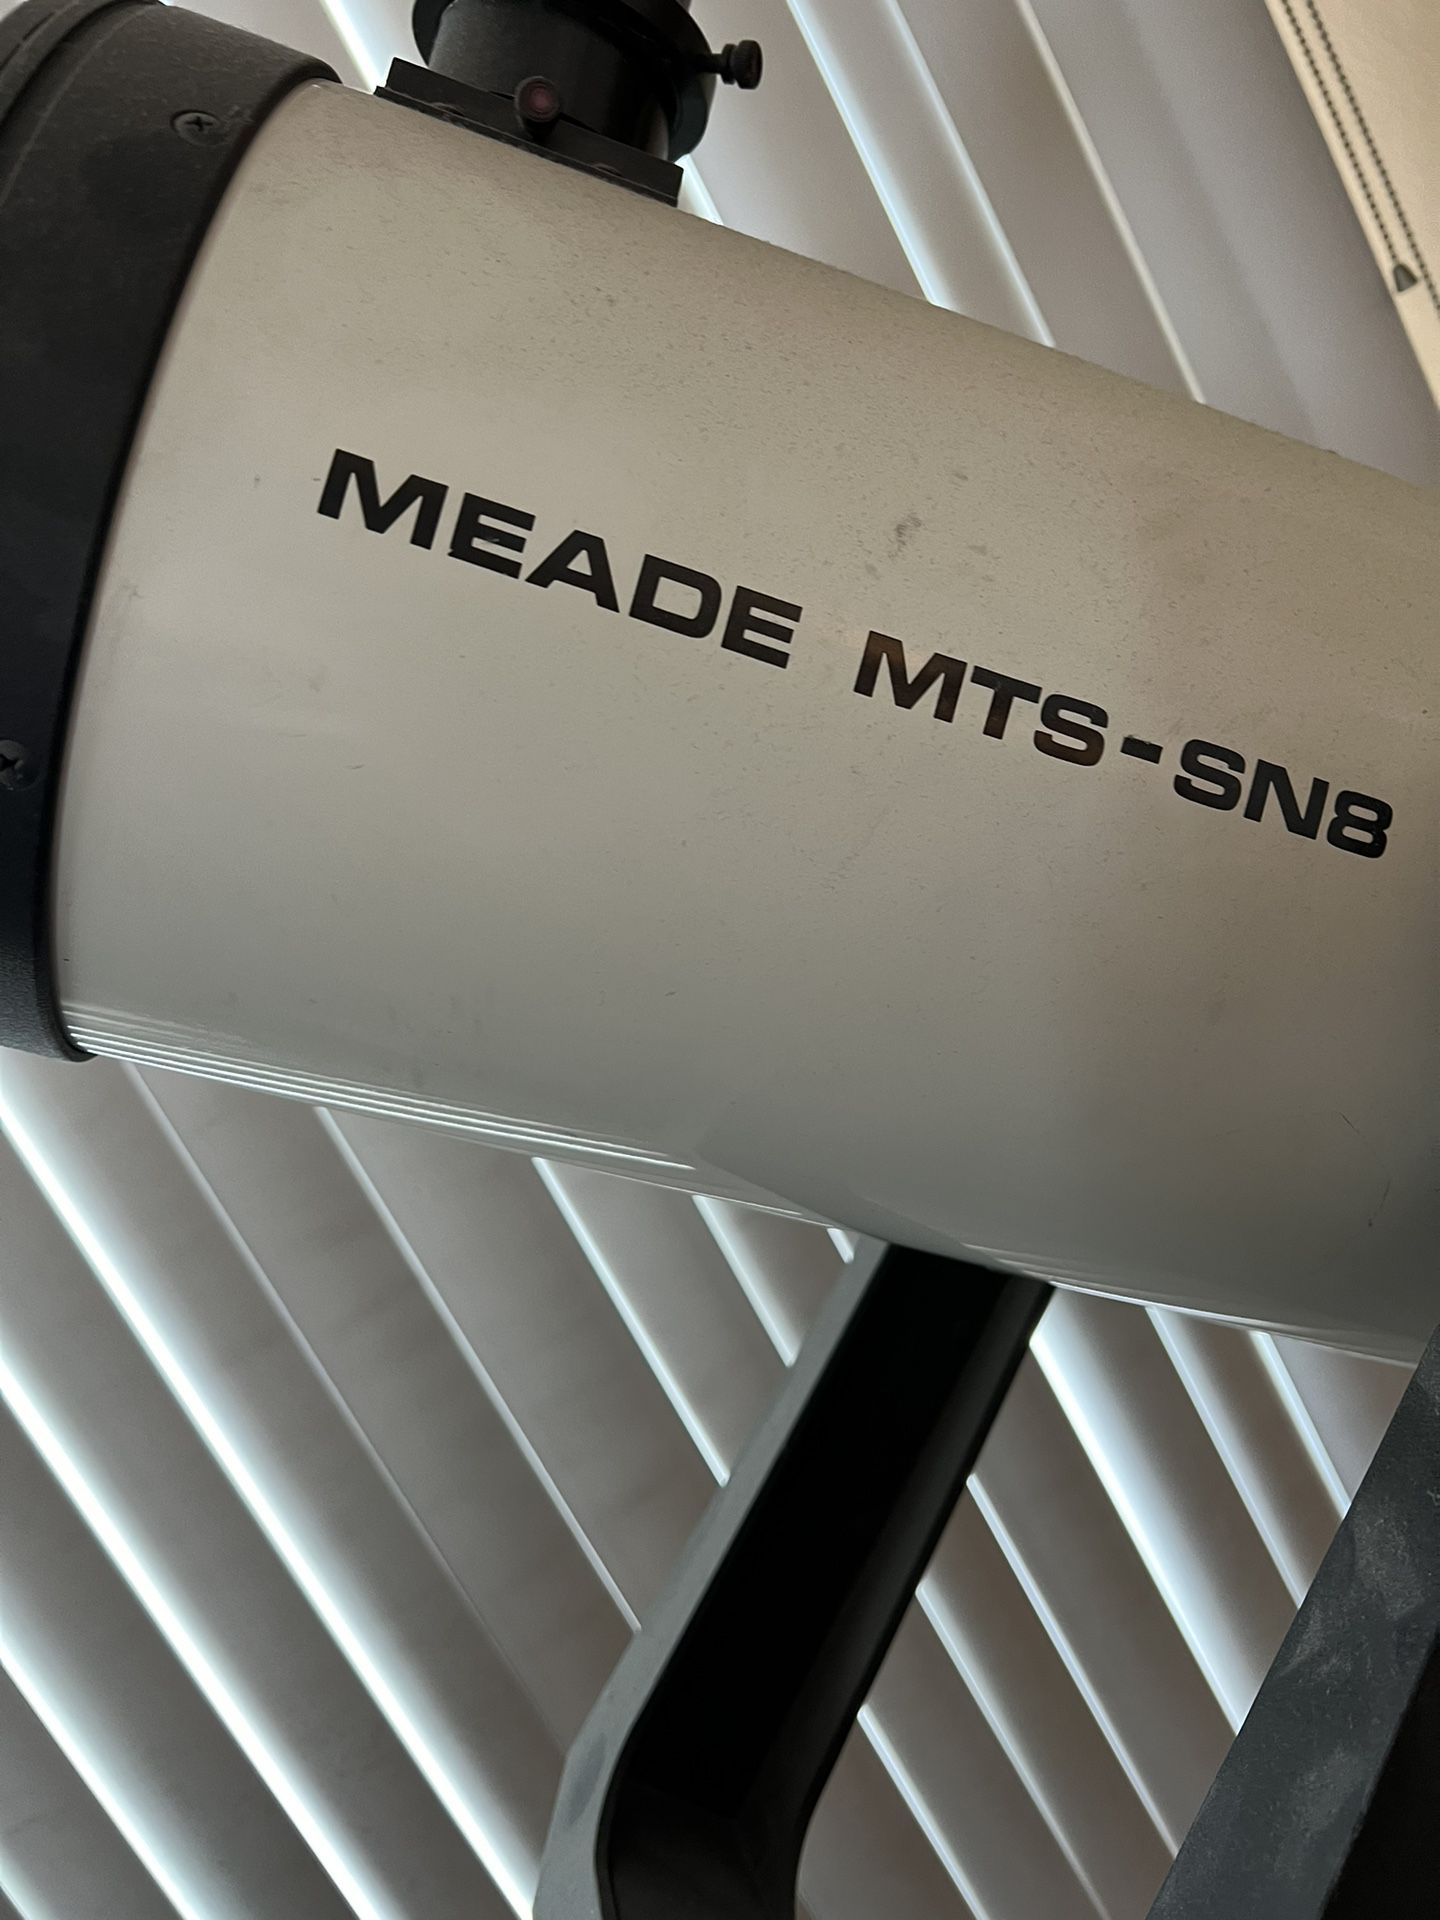 Meade Mts-sn8 Telescope $500